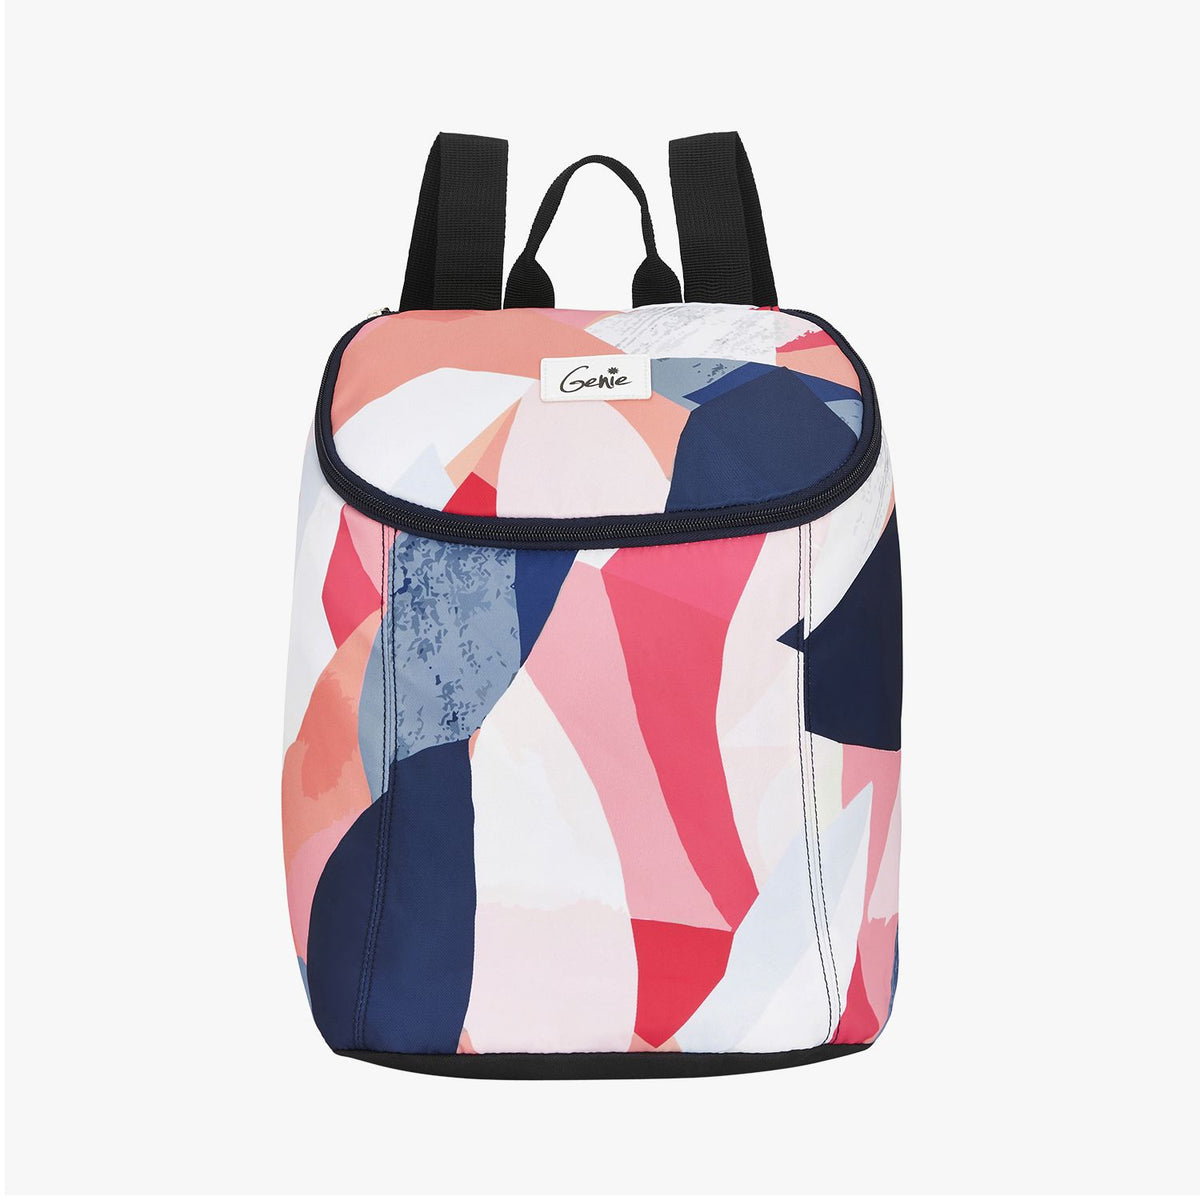 Genie Vougish 13.5L Multicolor Small Backpack Made Premium Fabric